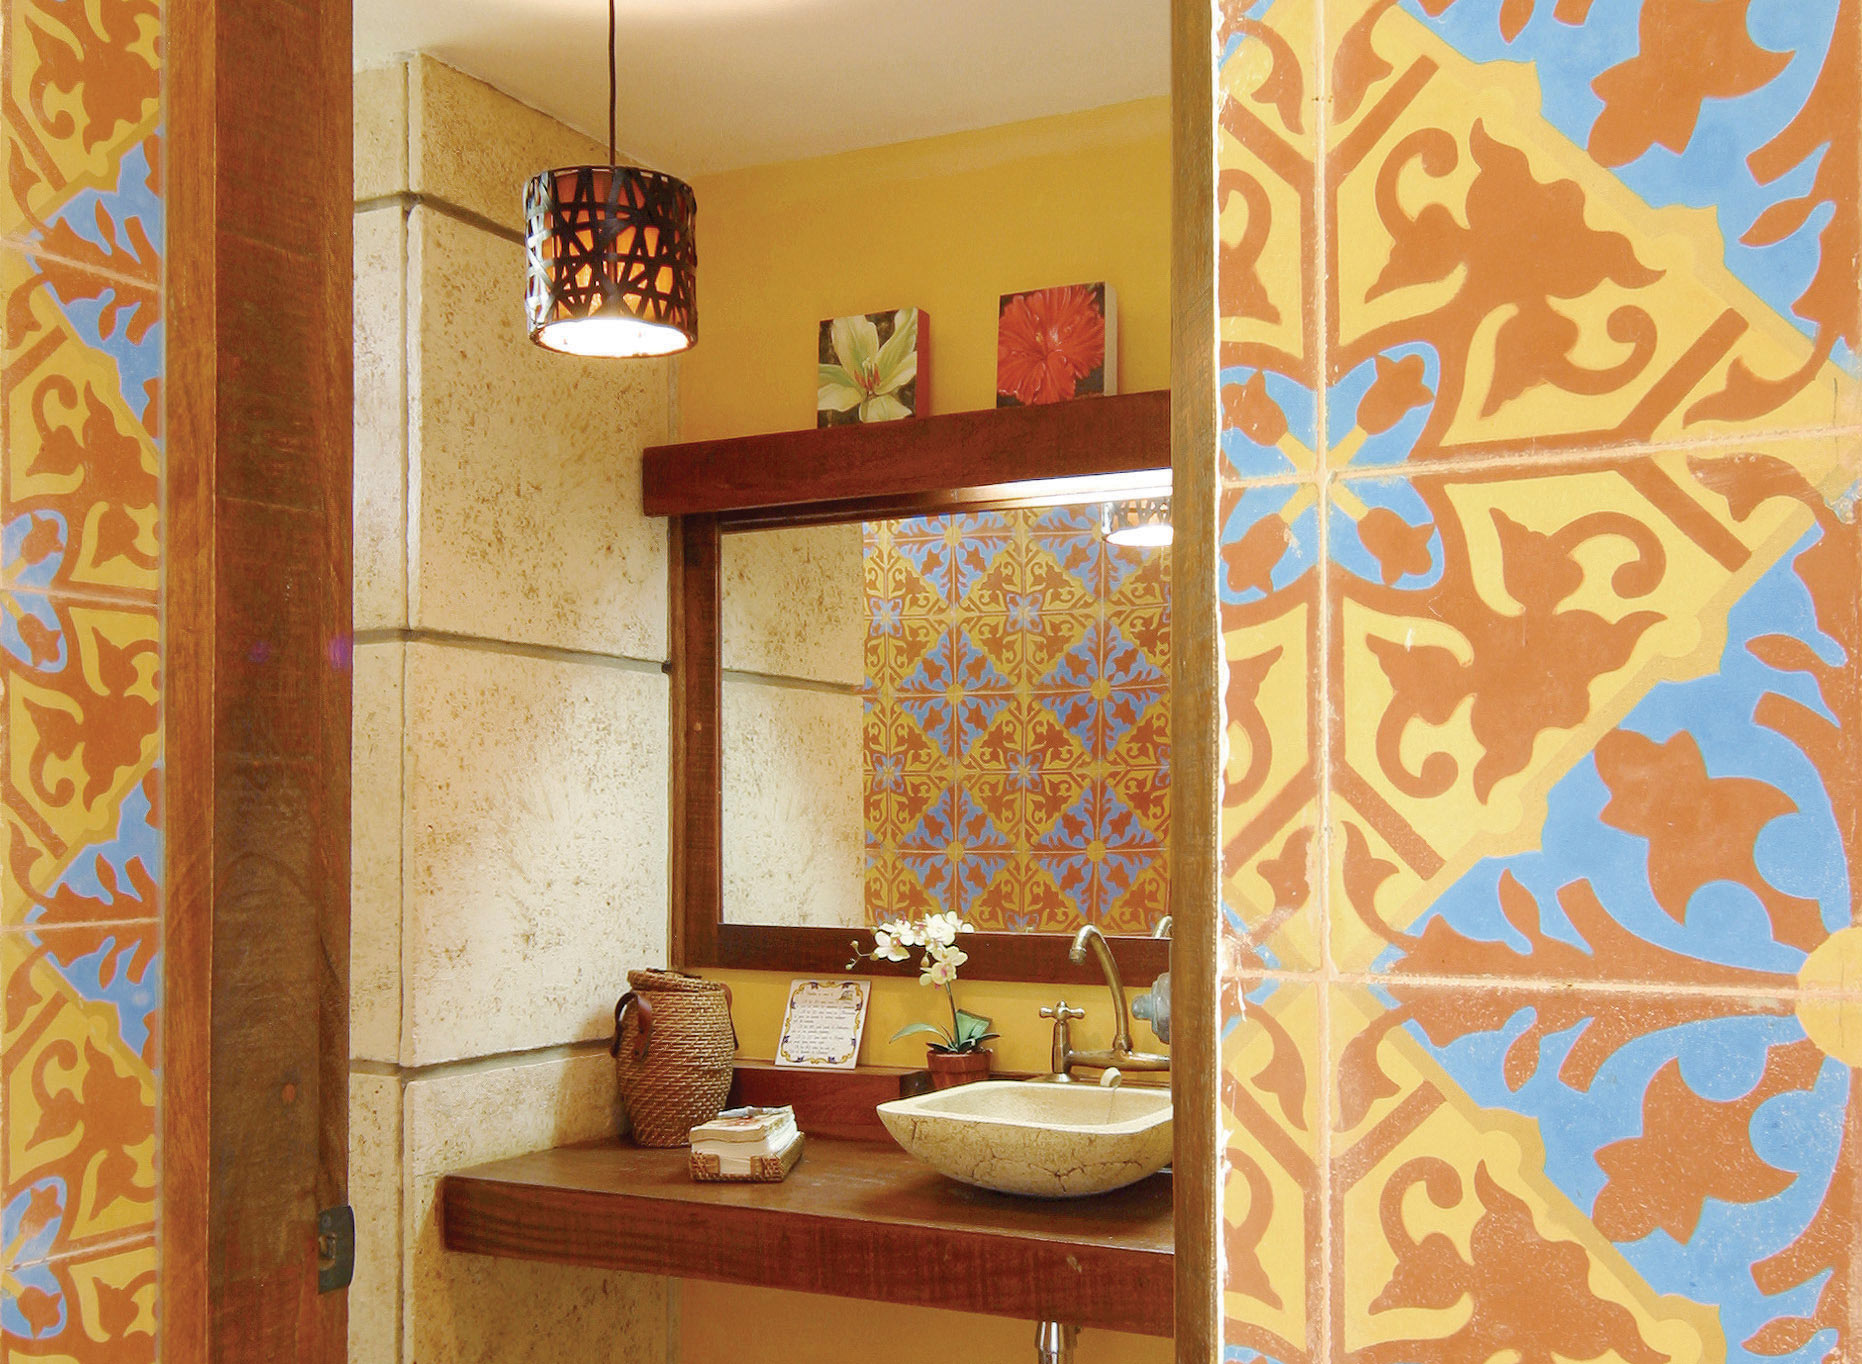 Las Palmas Bathroom - Cuban Tile